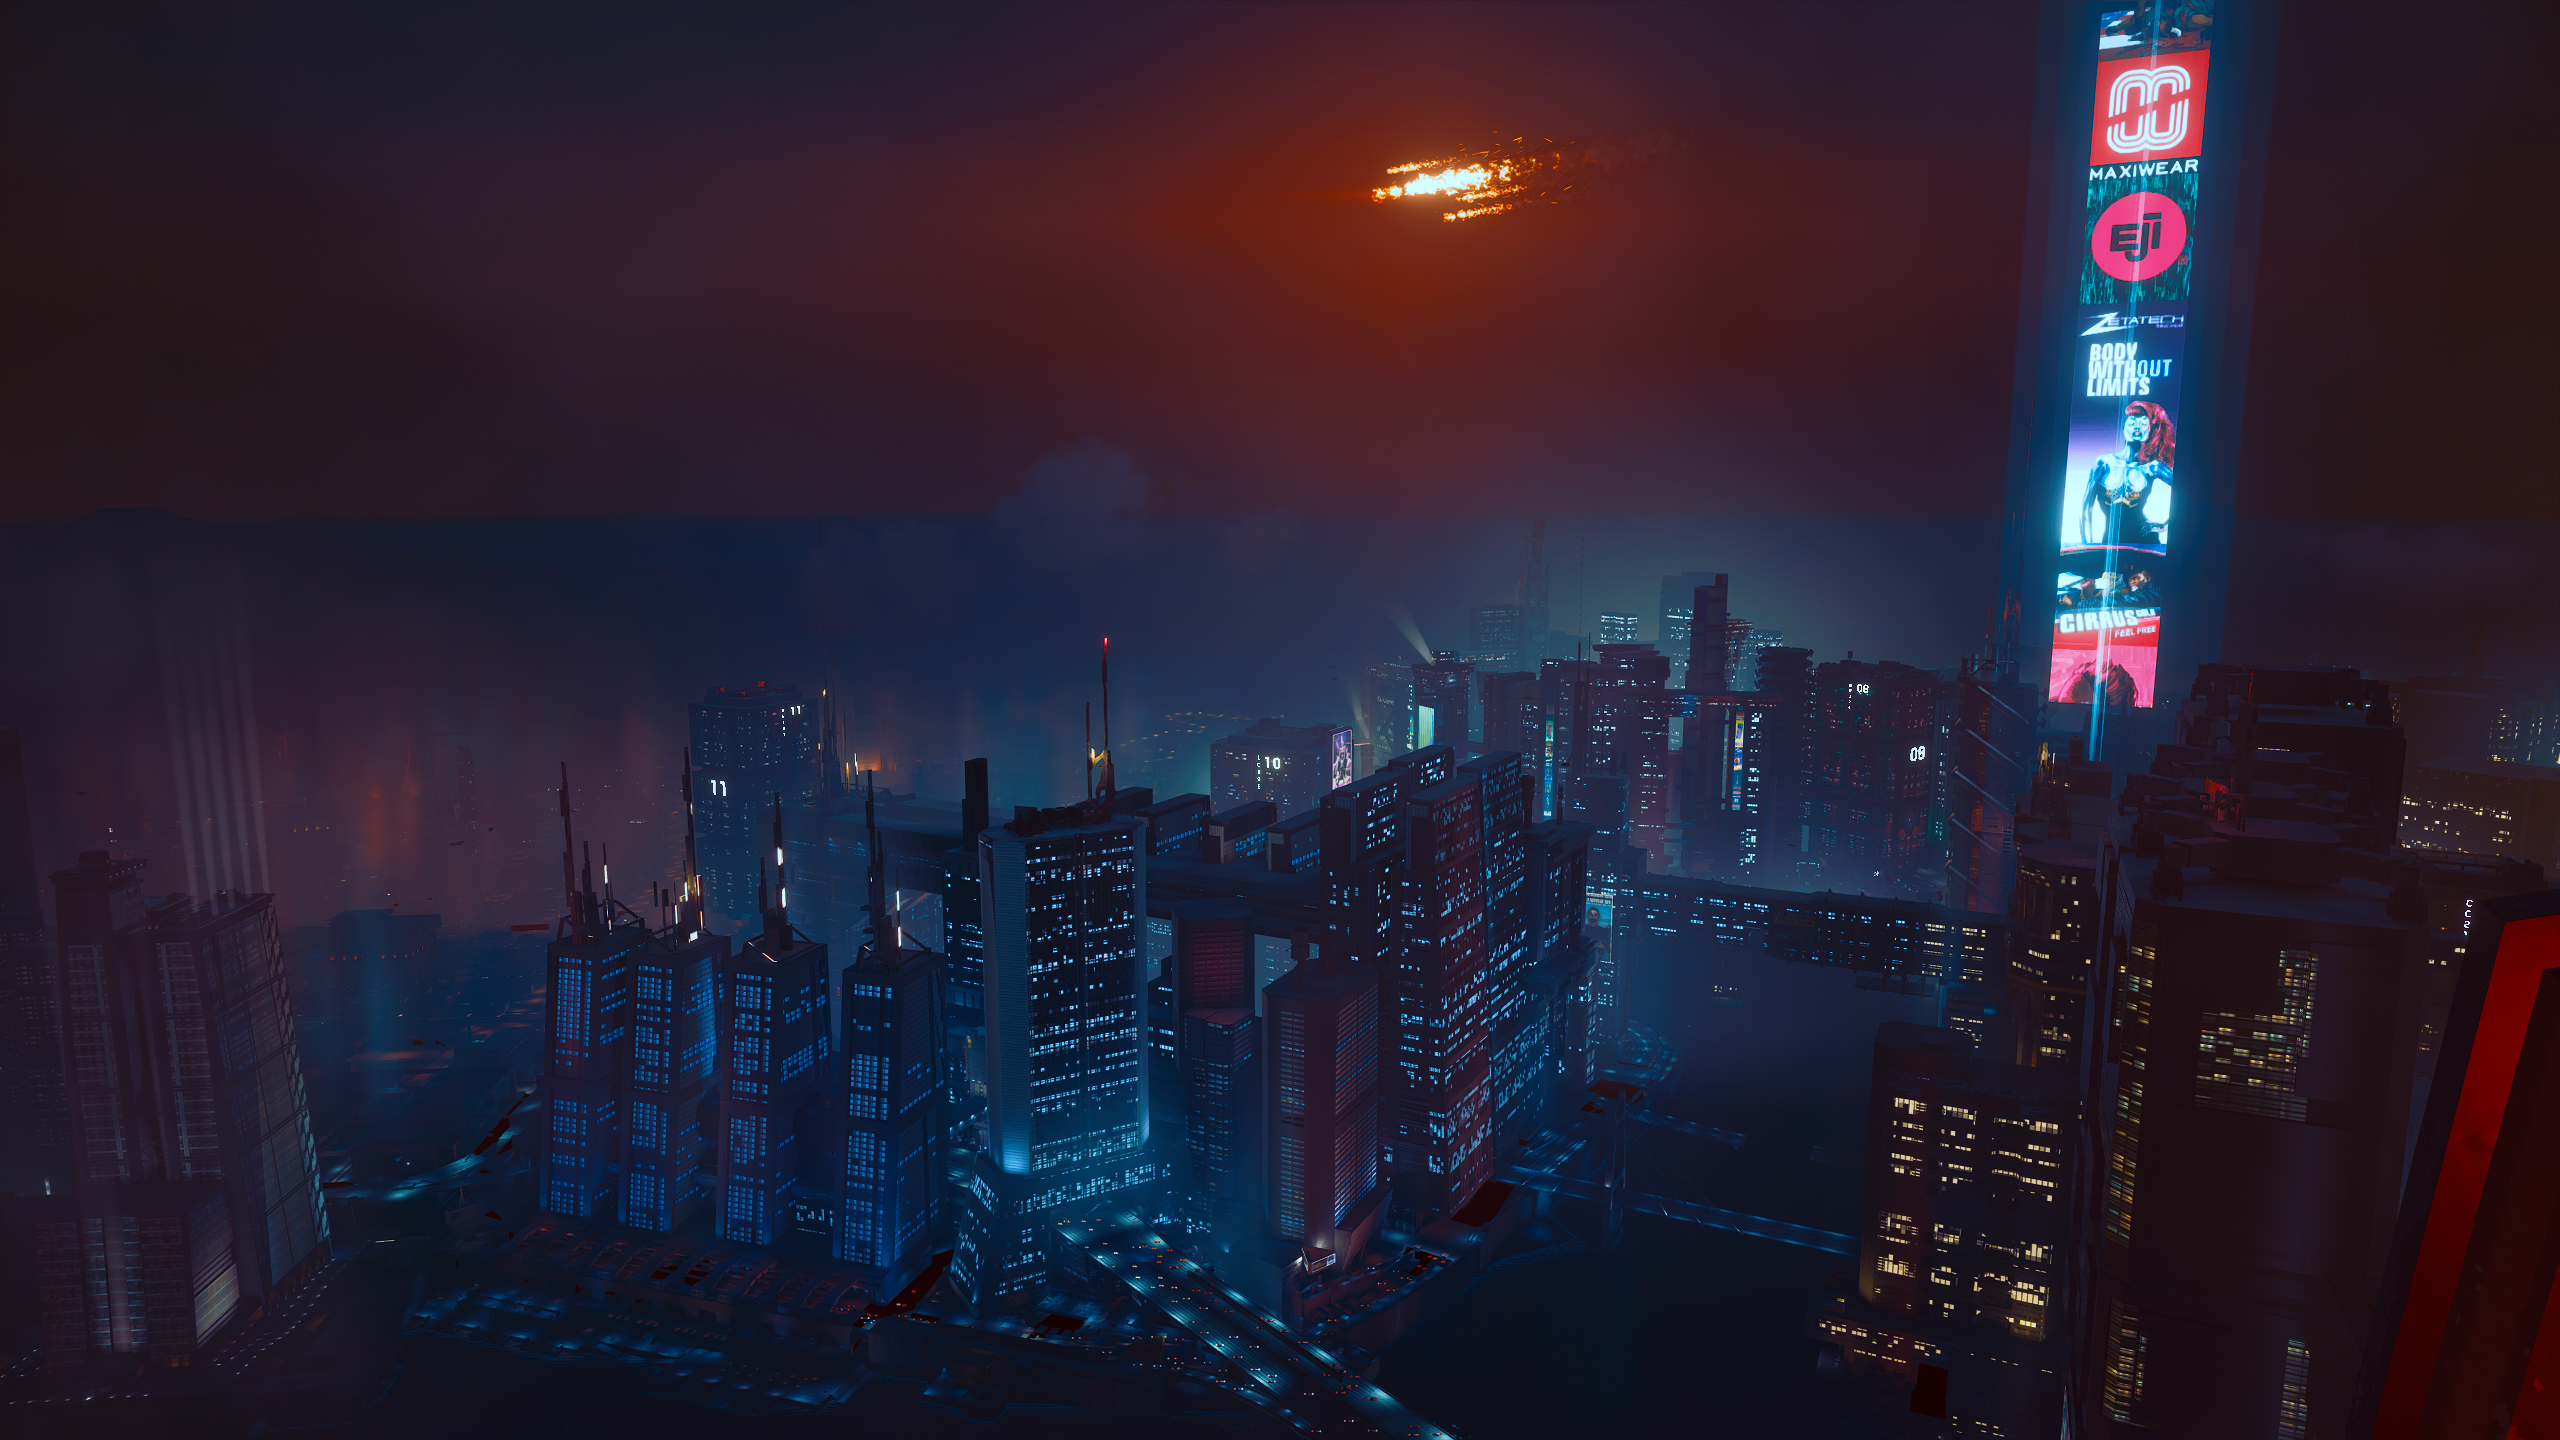 General 2560x1440 Cyberpunk 2077 city video games PC gaming futuristic city science fiction